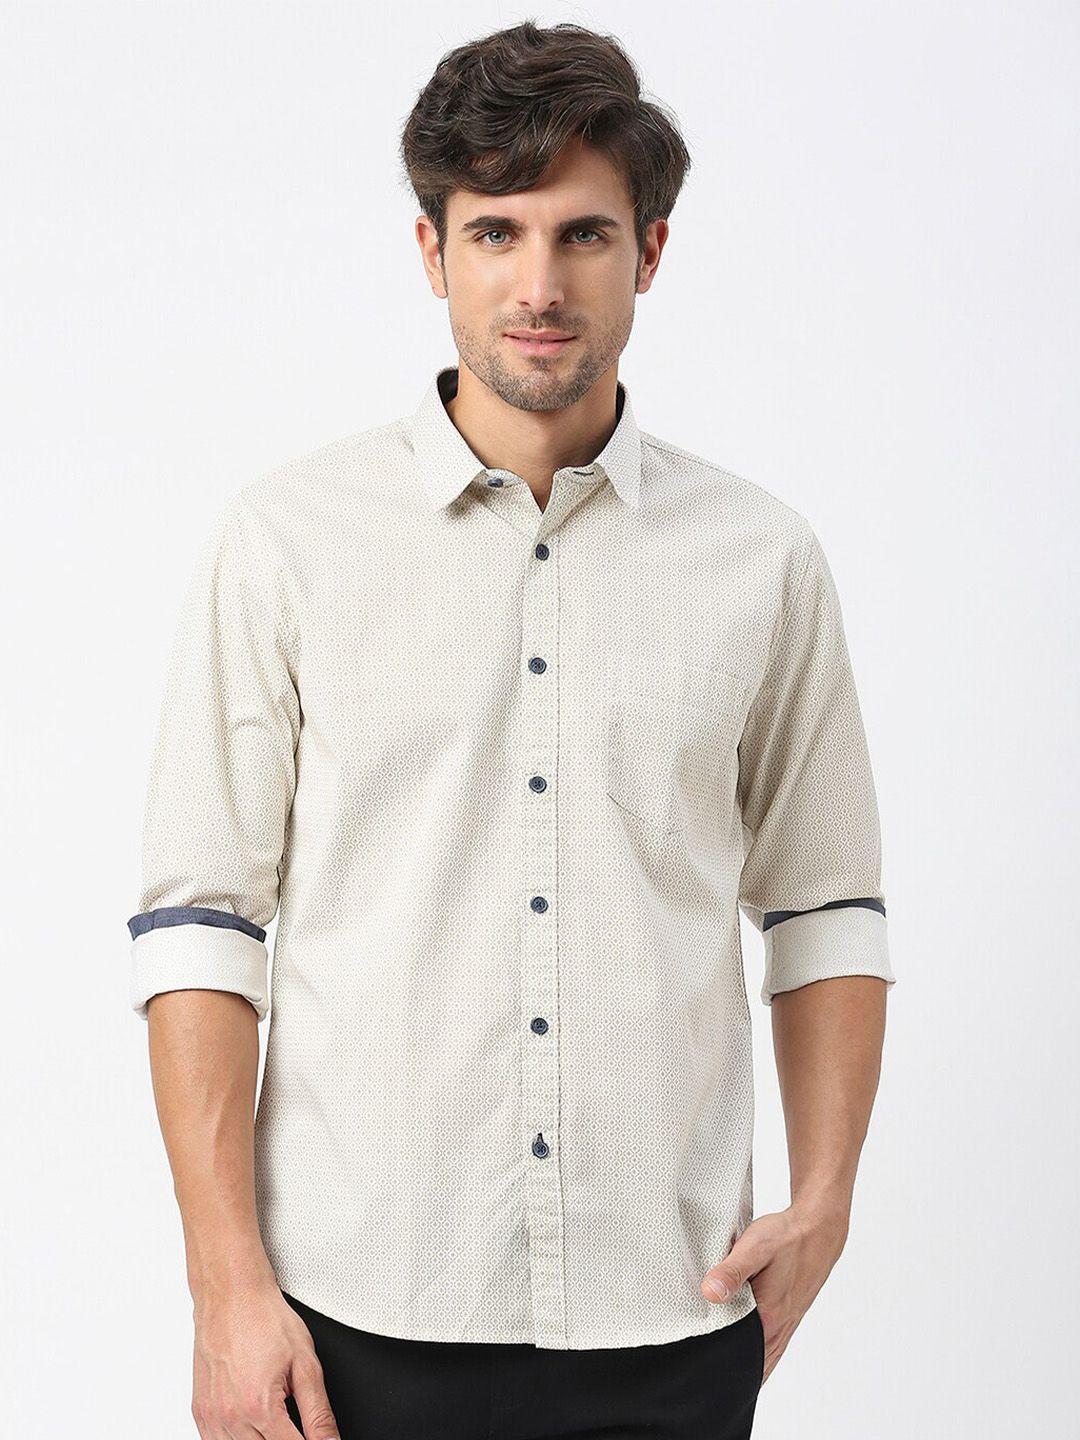 dragon-hill-conversational-printed-slim-fit-cotton-casual-shirt